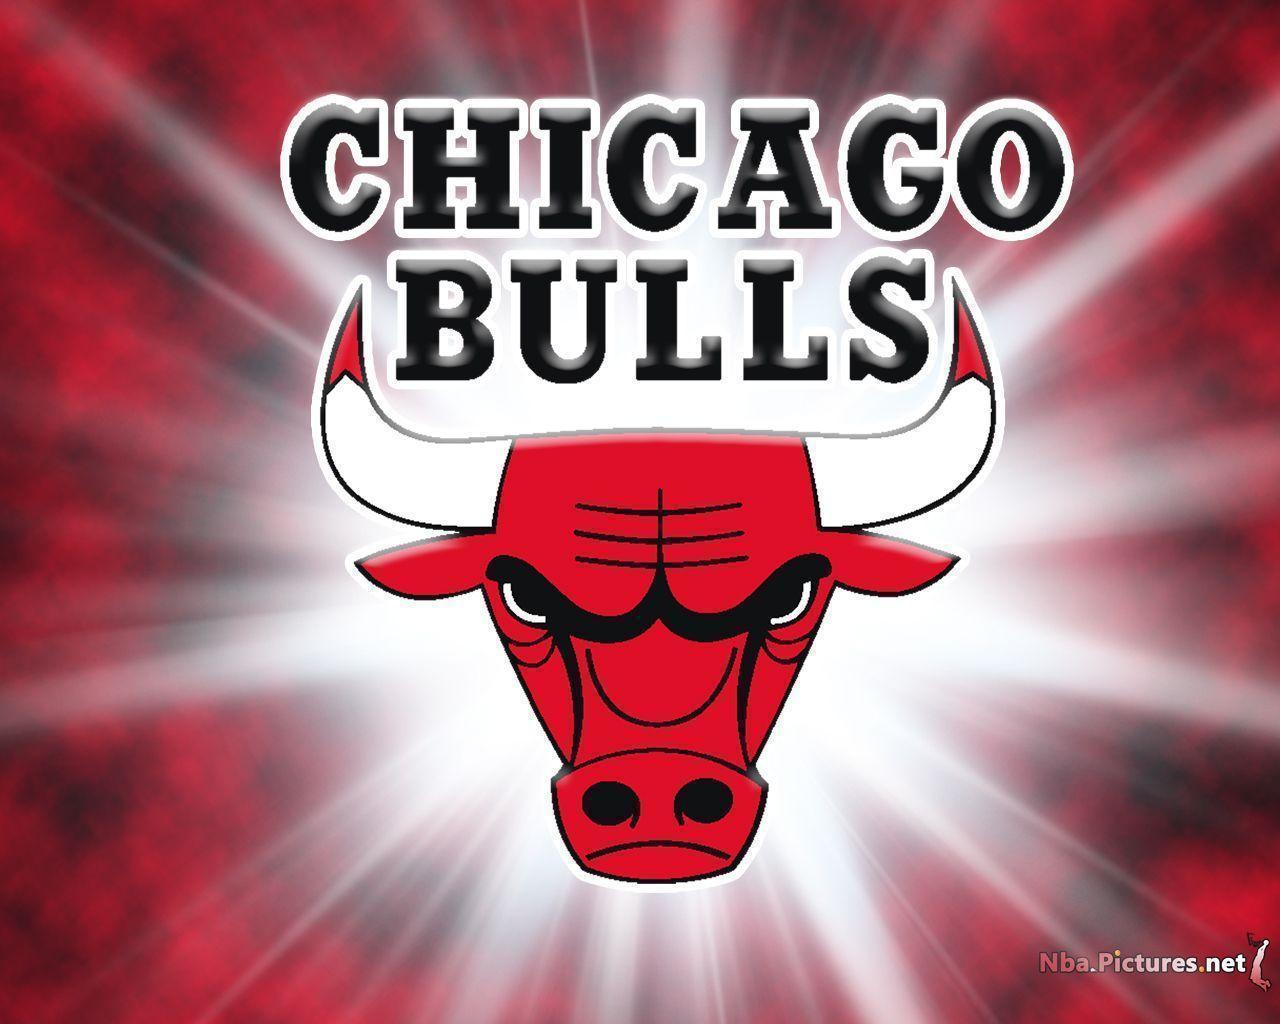 Chicago Bulls Wallpaper 8 Background. Wallruru